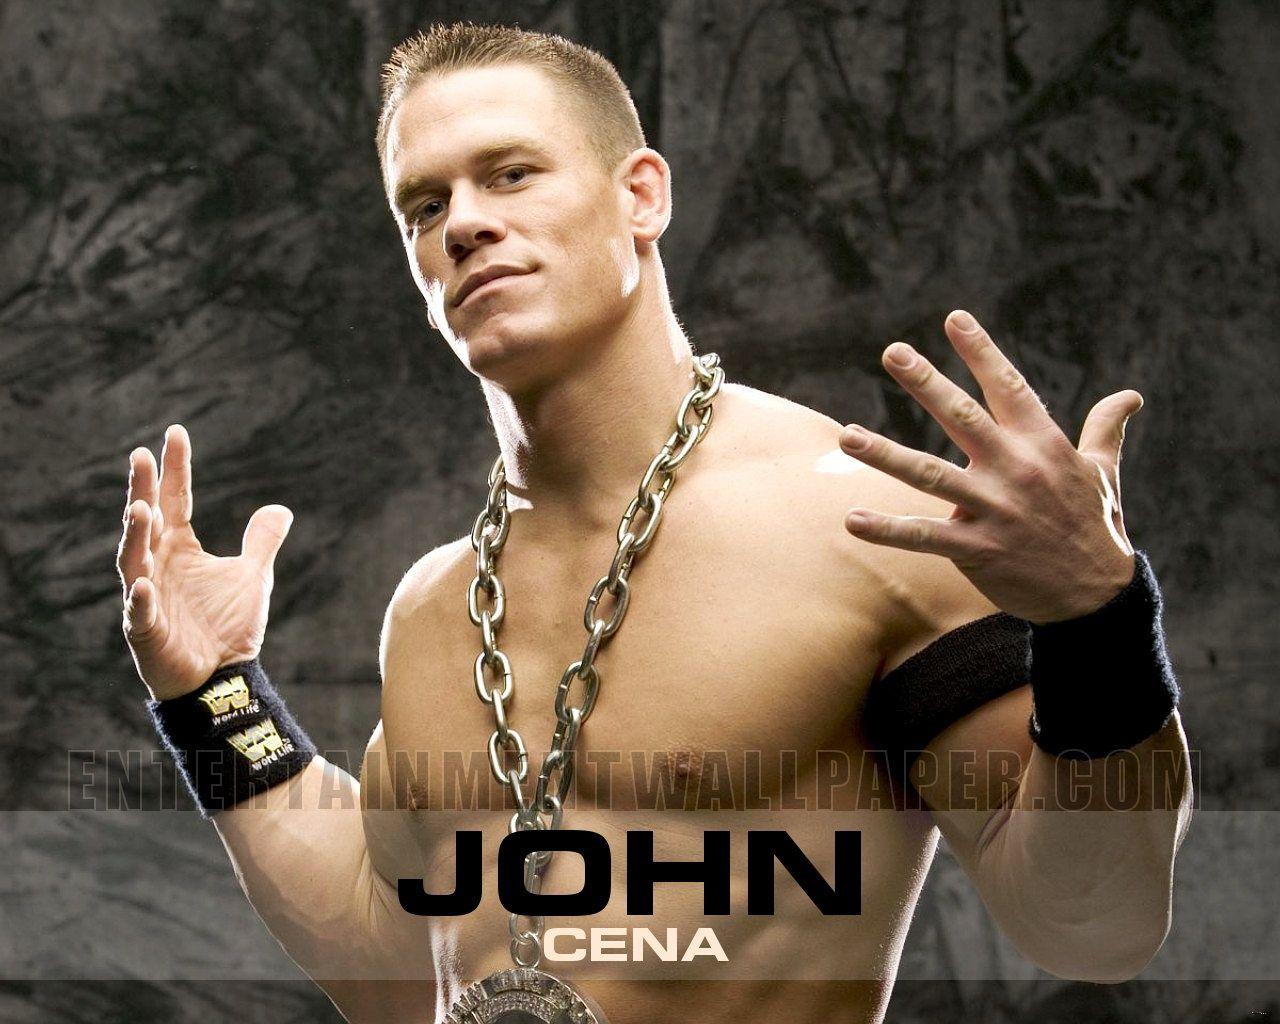 The 9 best John Cena Wallpaper image. John cena, Wwe